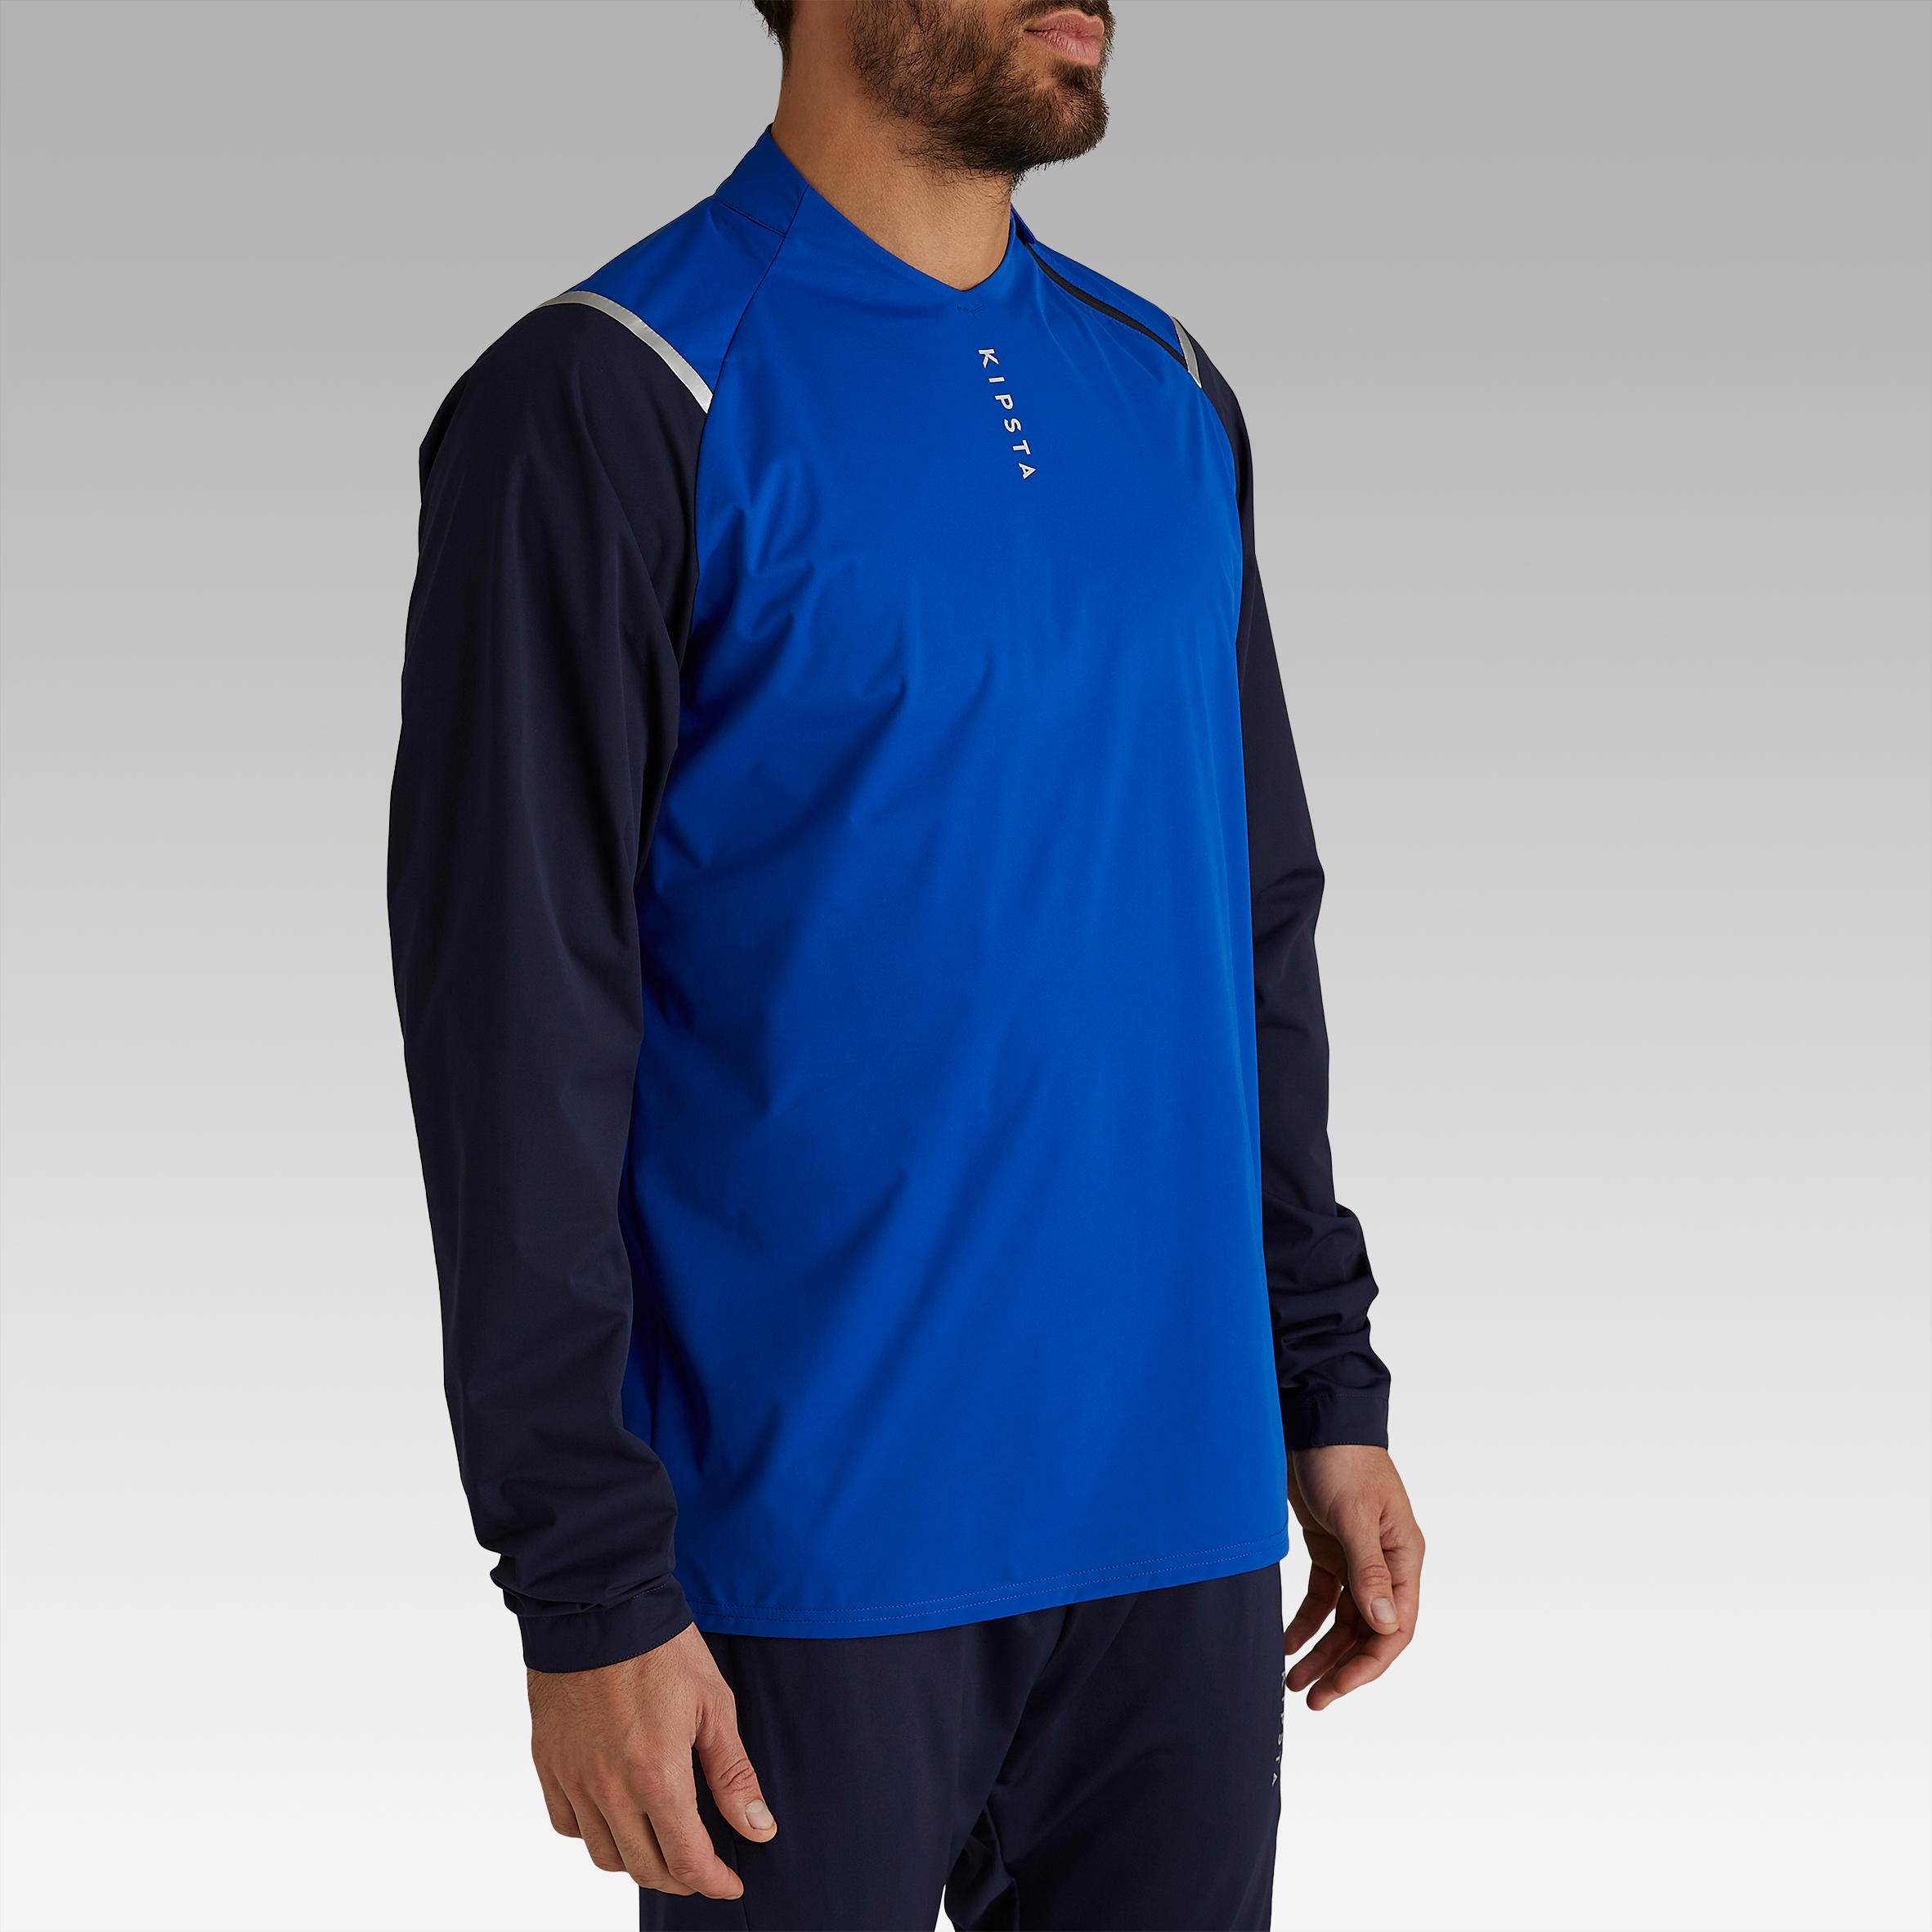 T500 Adult Waterproof Windproof Football Jacket - Blue 3/10